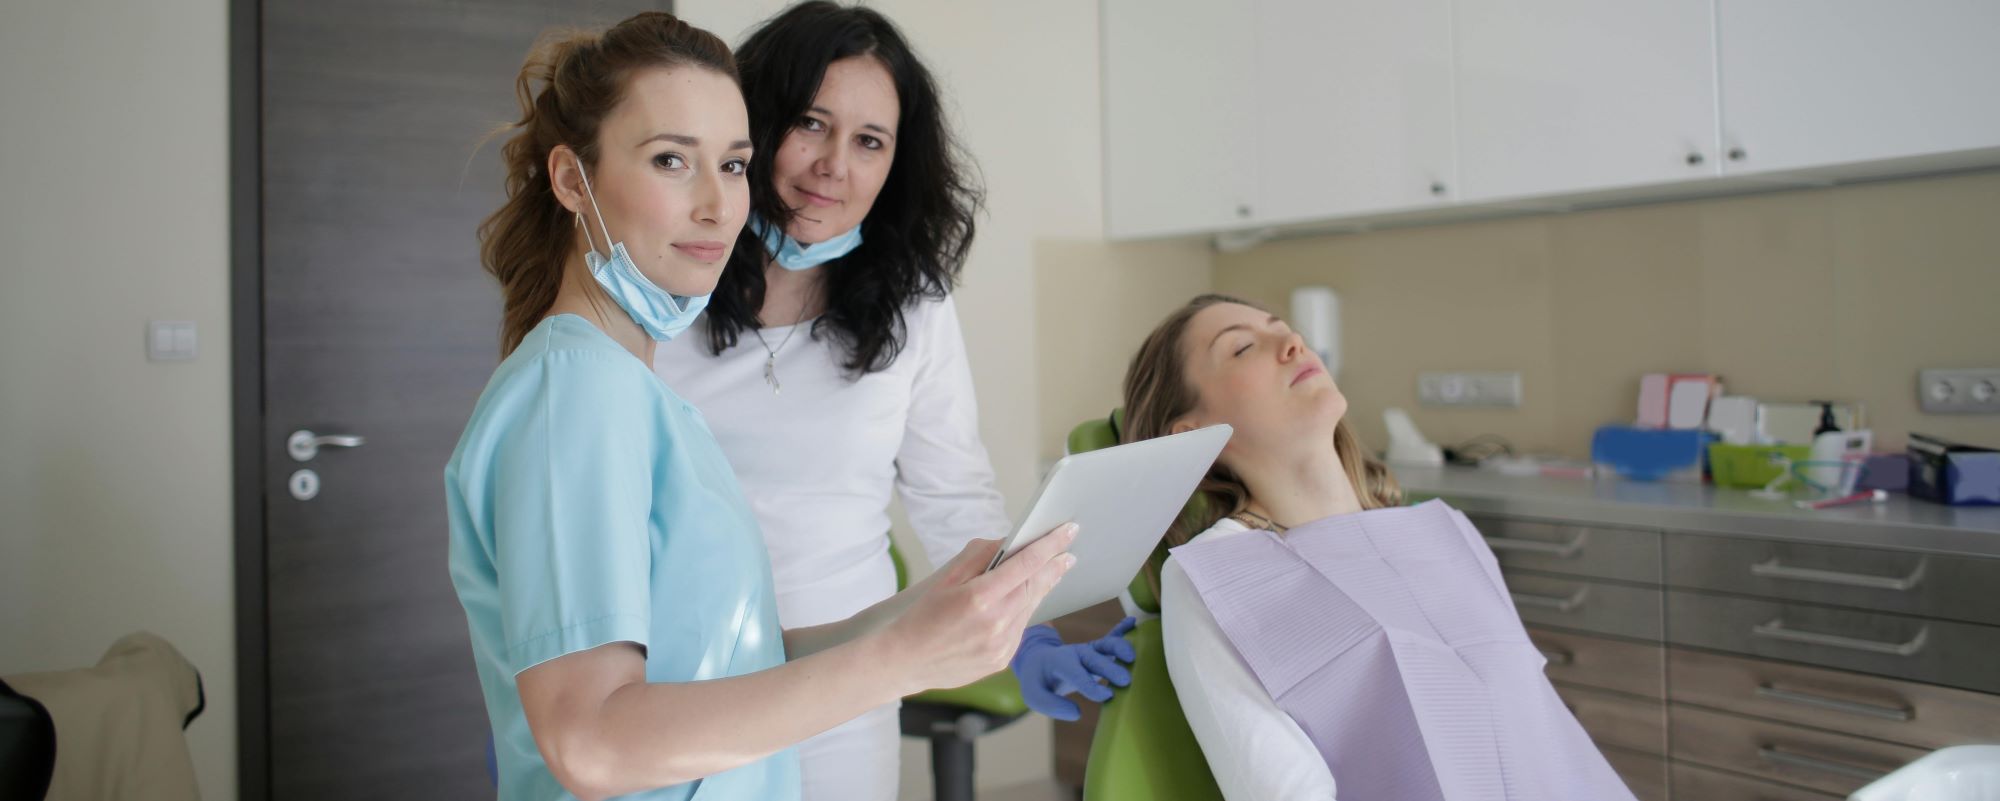 Dentist Assistants